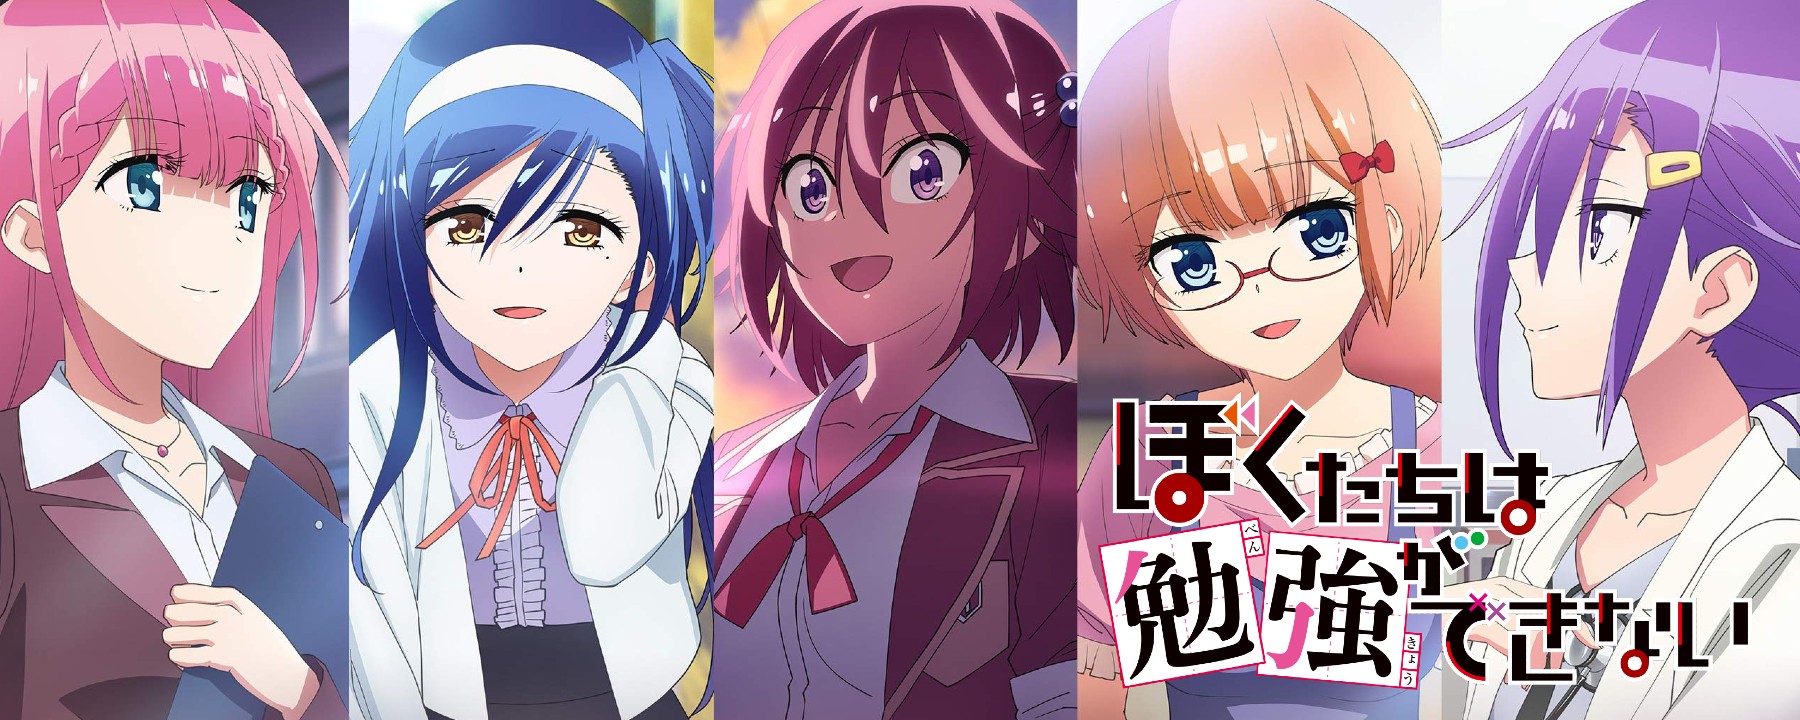 Anime Hajime Review: We Never Learn Season 2 - Anime Hajime